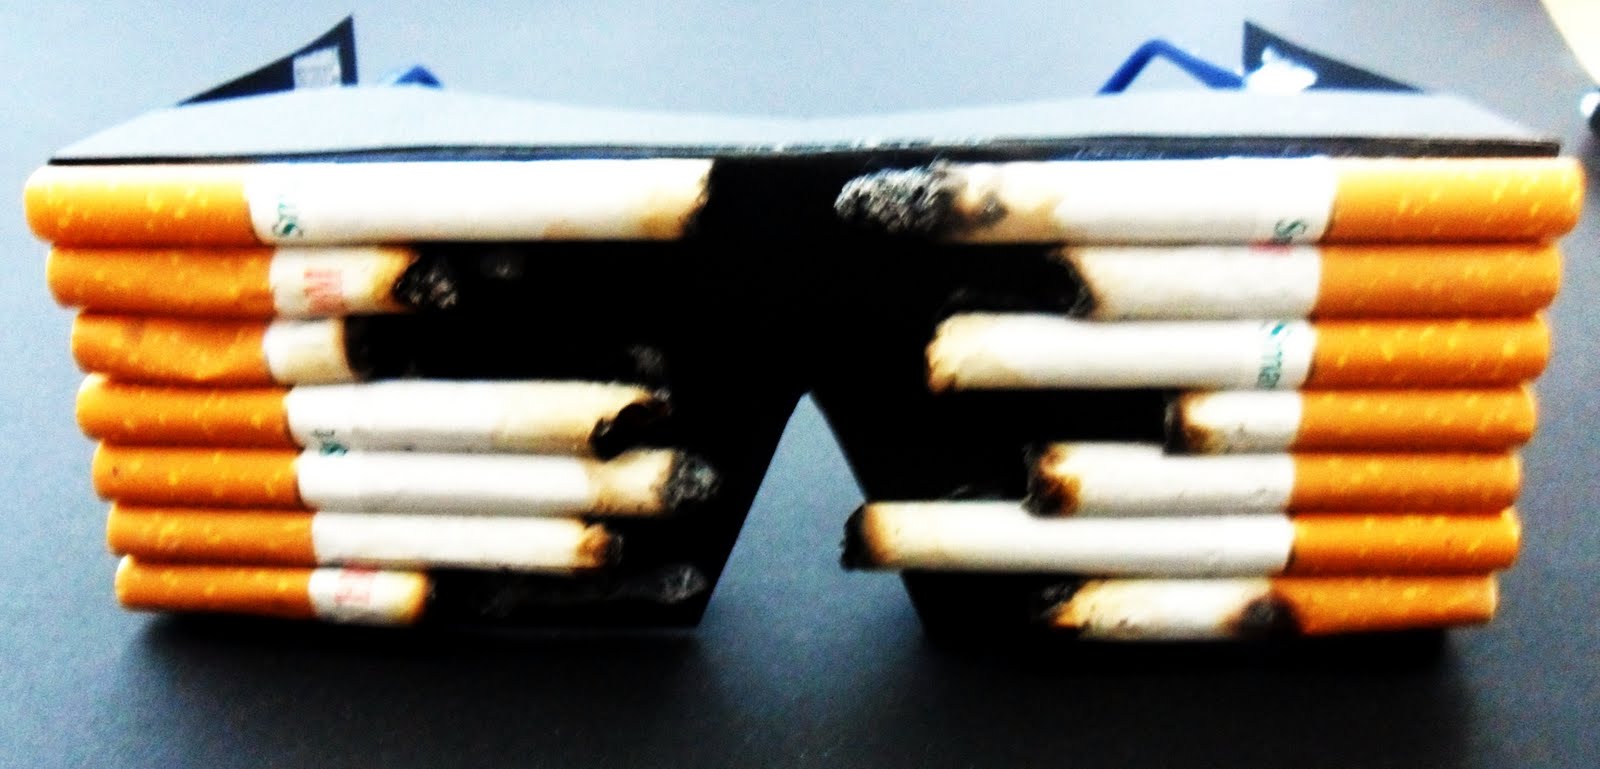 http://2.bp.blogspot.com/-VvPYDqqCKHc/TVudEgMqC8I/AAAAAAAAAEI/V2rxxV33KGE/s1600/Cigarettesunglasses%2B001.JPG